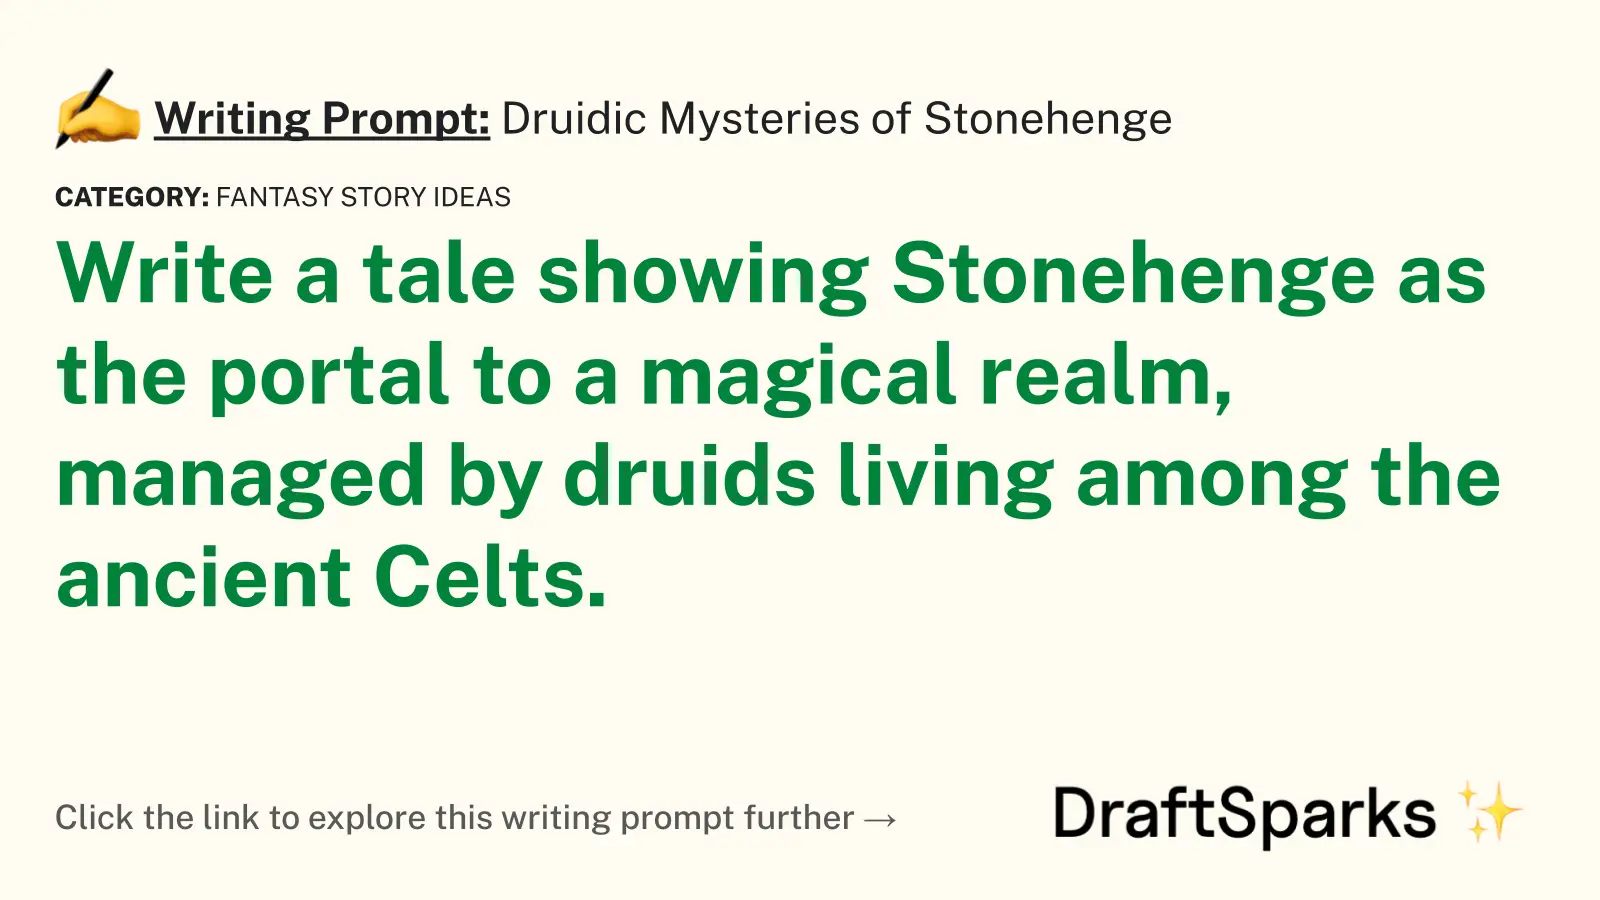 Druidic Mysteries of Stonehenge